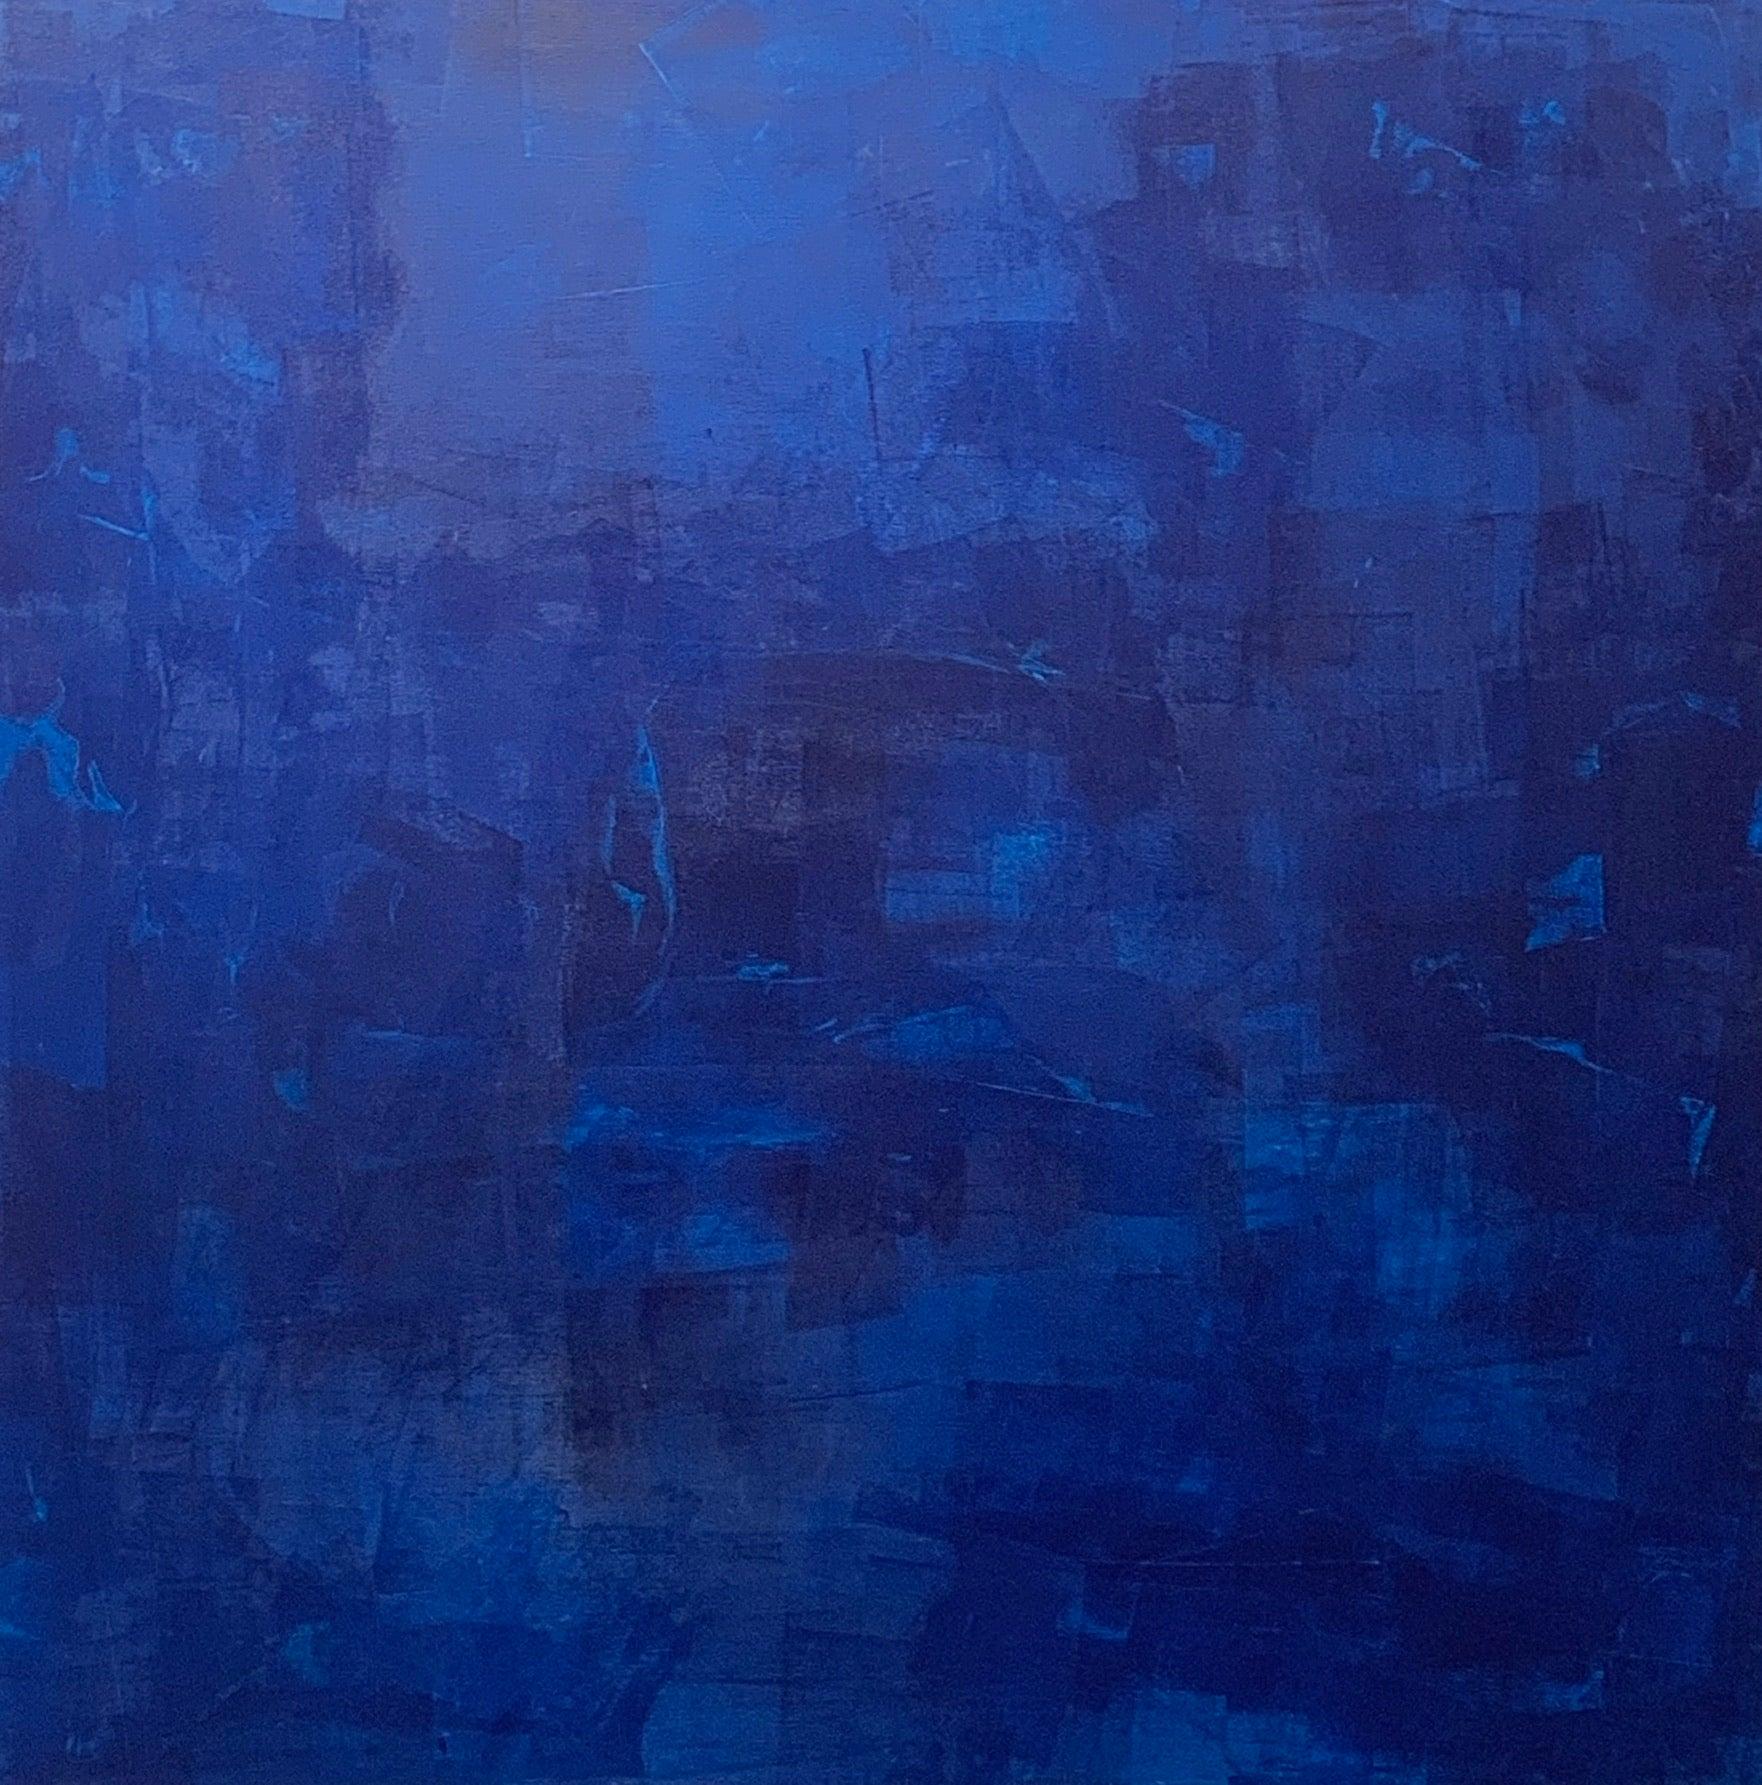 La mer profonde, océan contemporain, bleu foncé, essence de l'océan, art de Floride - Painting de Juanita Bellavance 